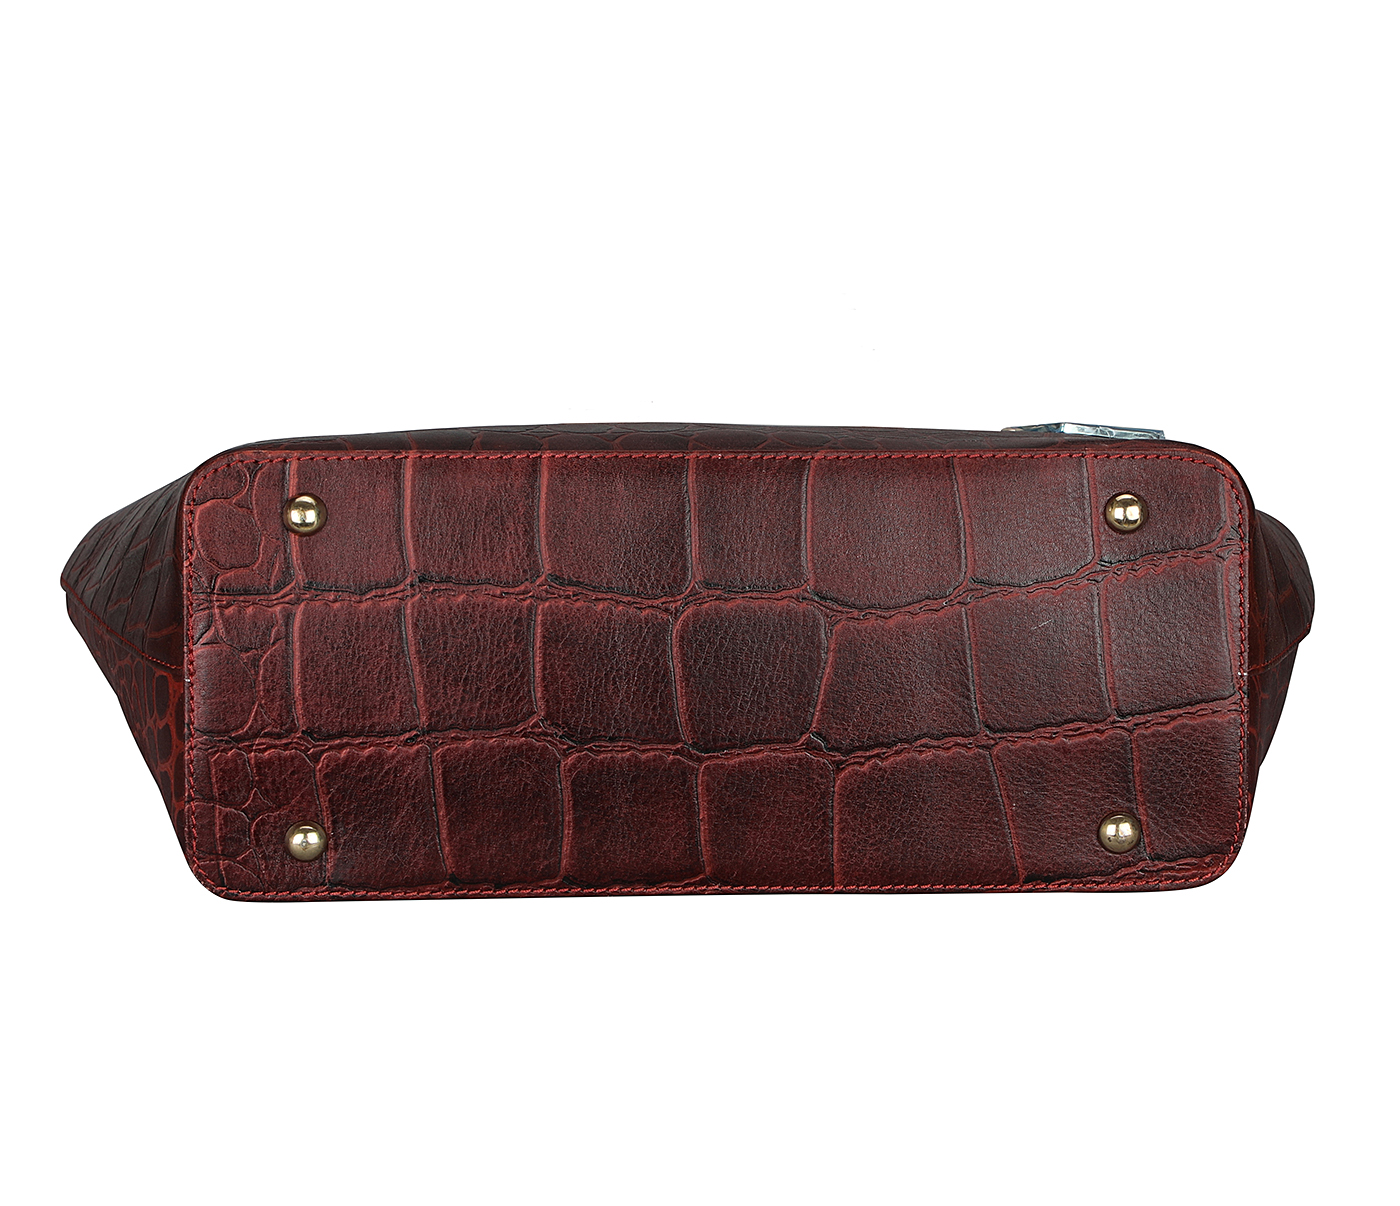 B887-Diana-Shoulder work bag in Genuine Leather - Wine